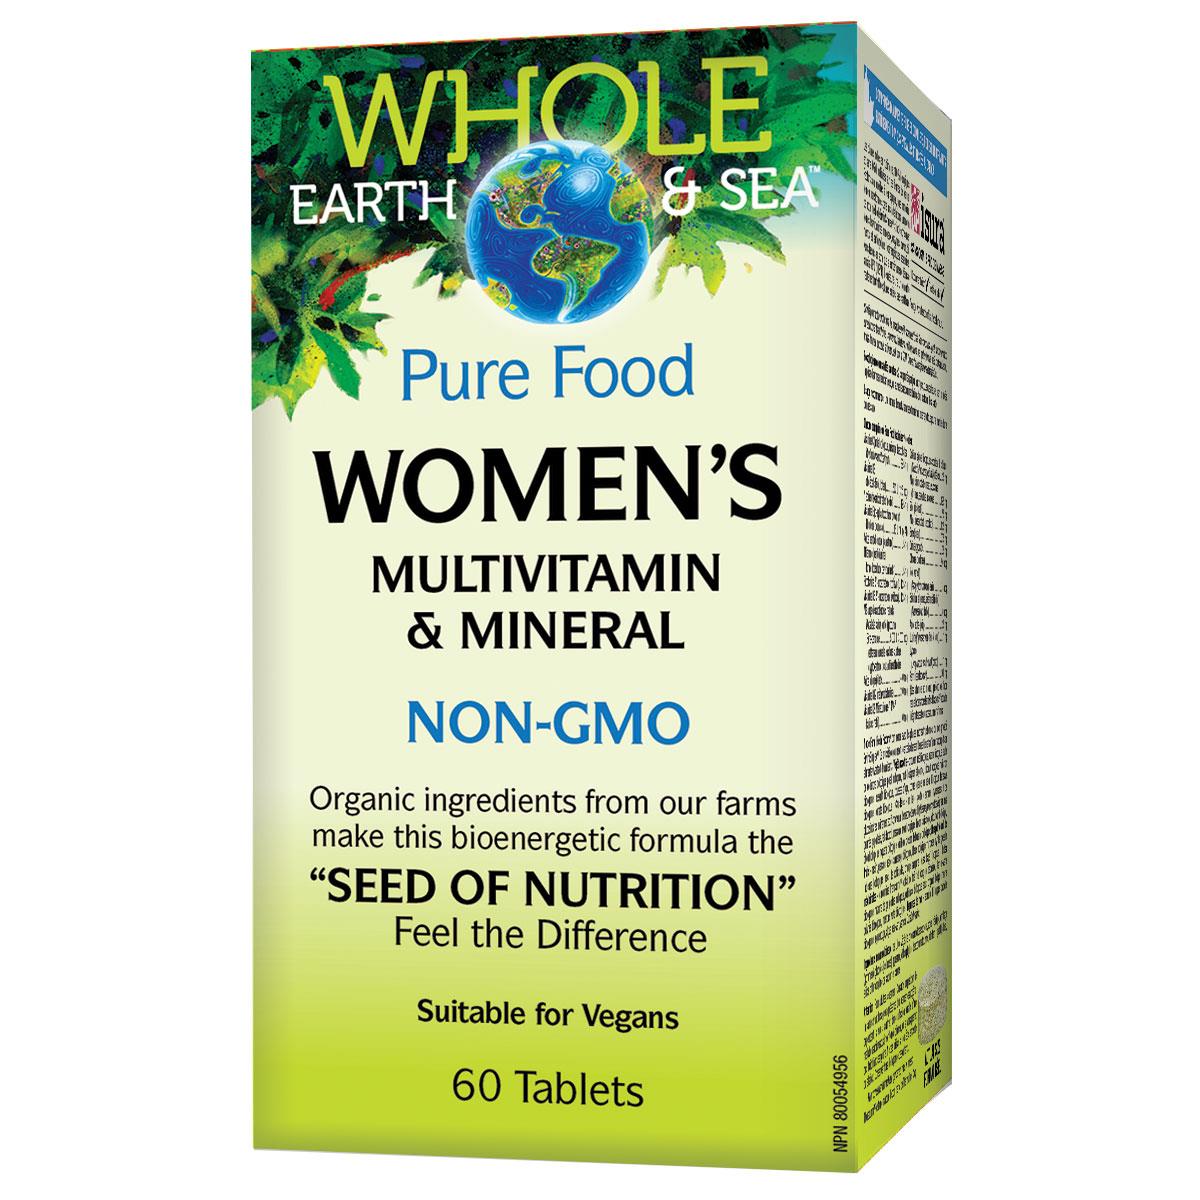 Natural Factors Whole Earth & Sea Women's Multivitamin & Mineral, 60 Tabs